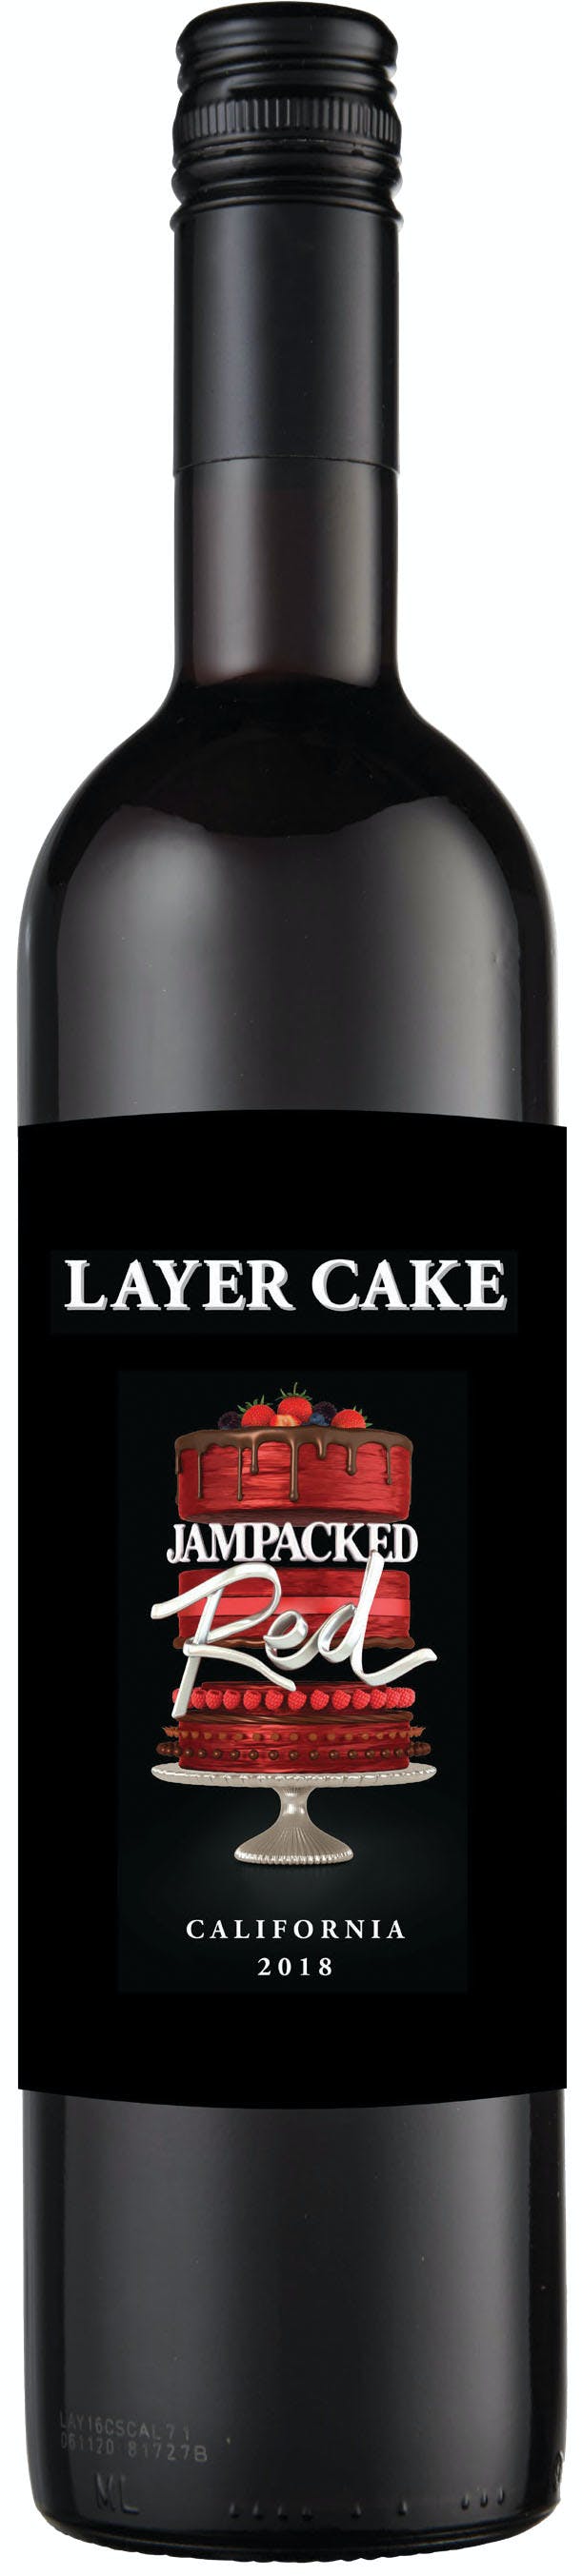 Layer Cake Jampacked Red, California